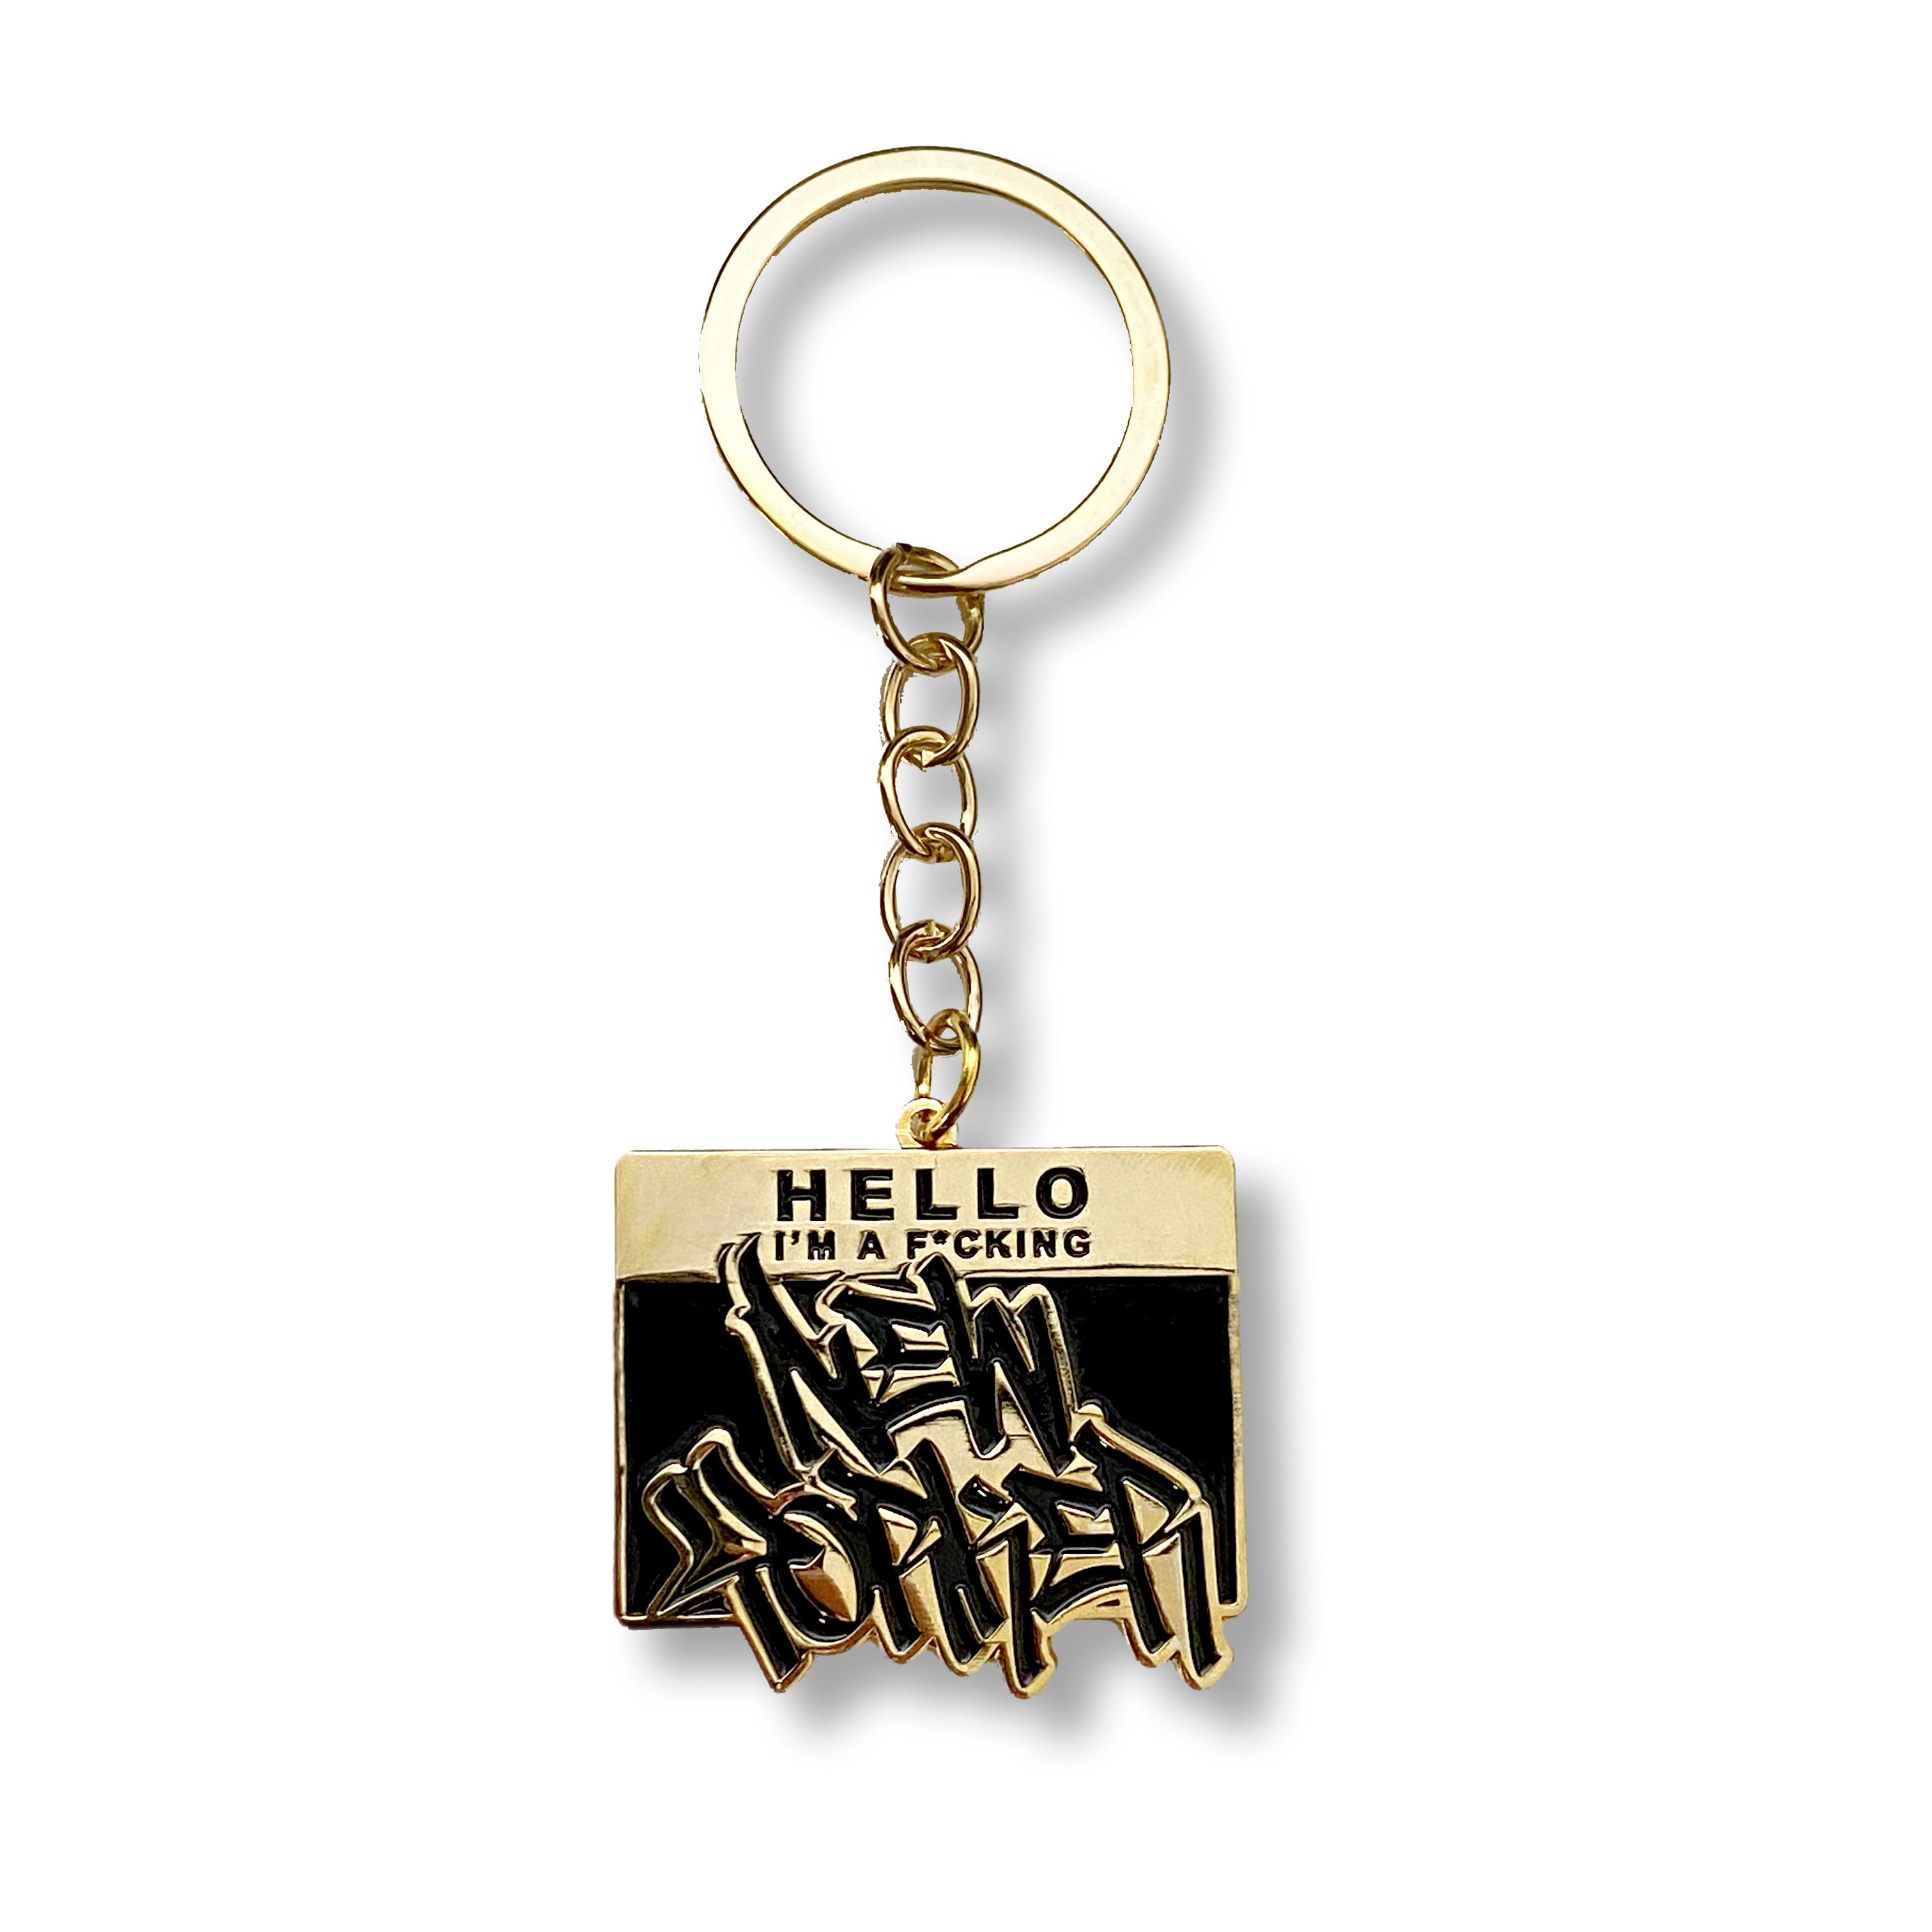 Hello, I'm a New Yorker - Keychain - GustoNYC